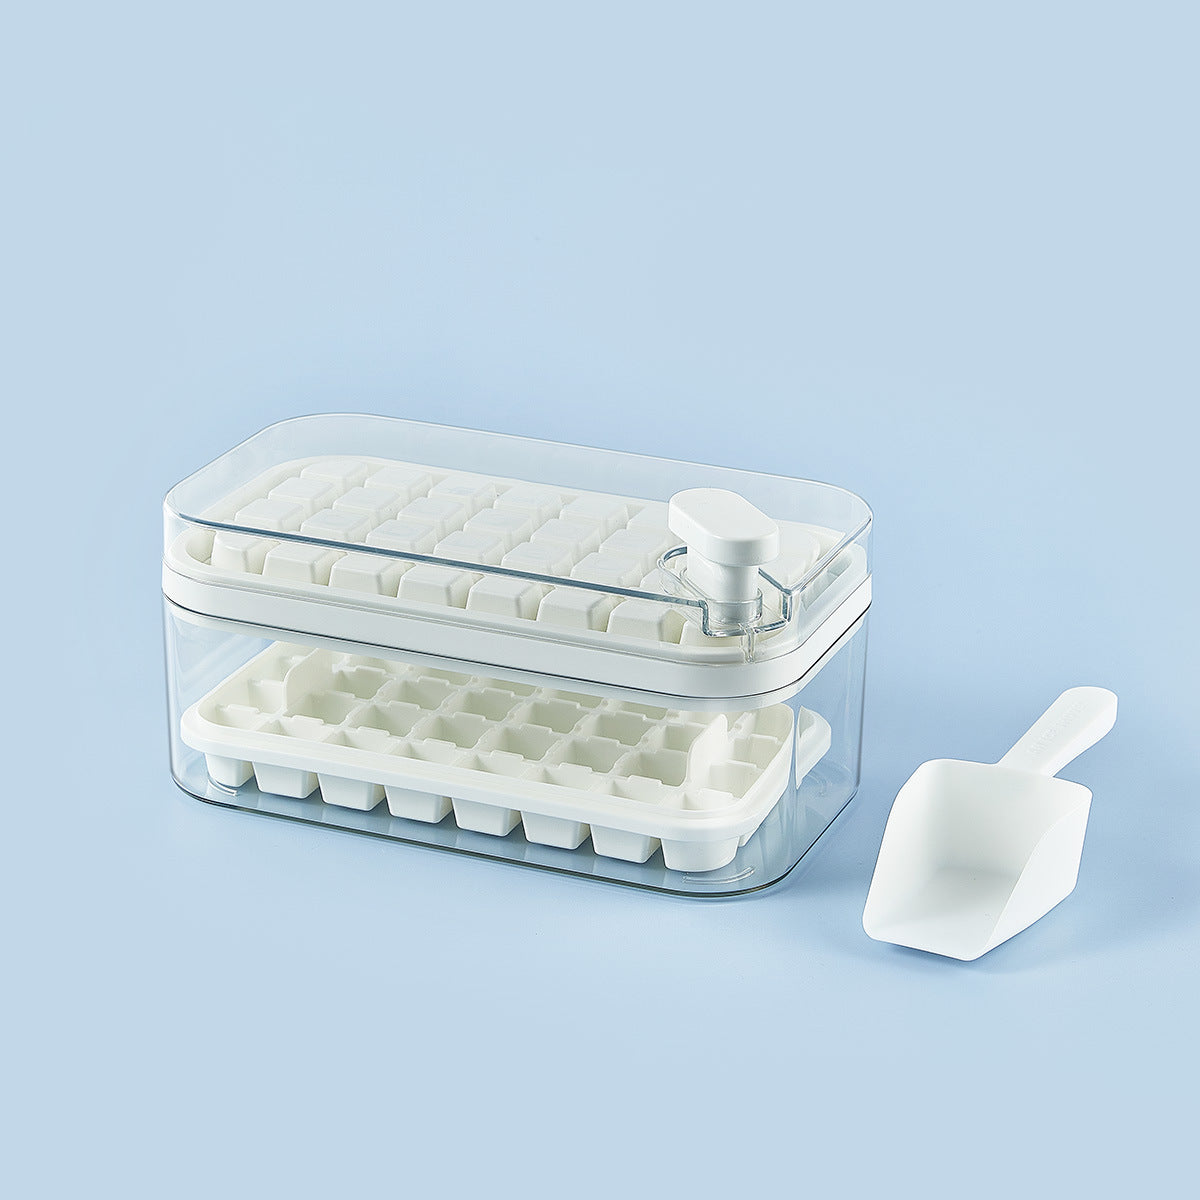 Home Refrigerator Ice Storage Box Homemade Ice Lattice Food Grade One Key Deicing